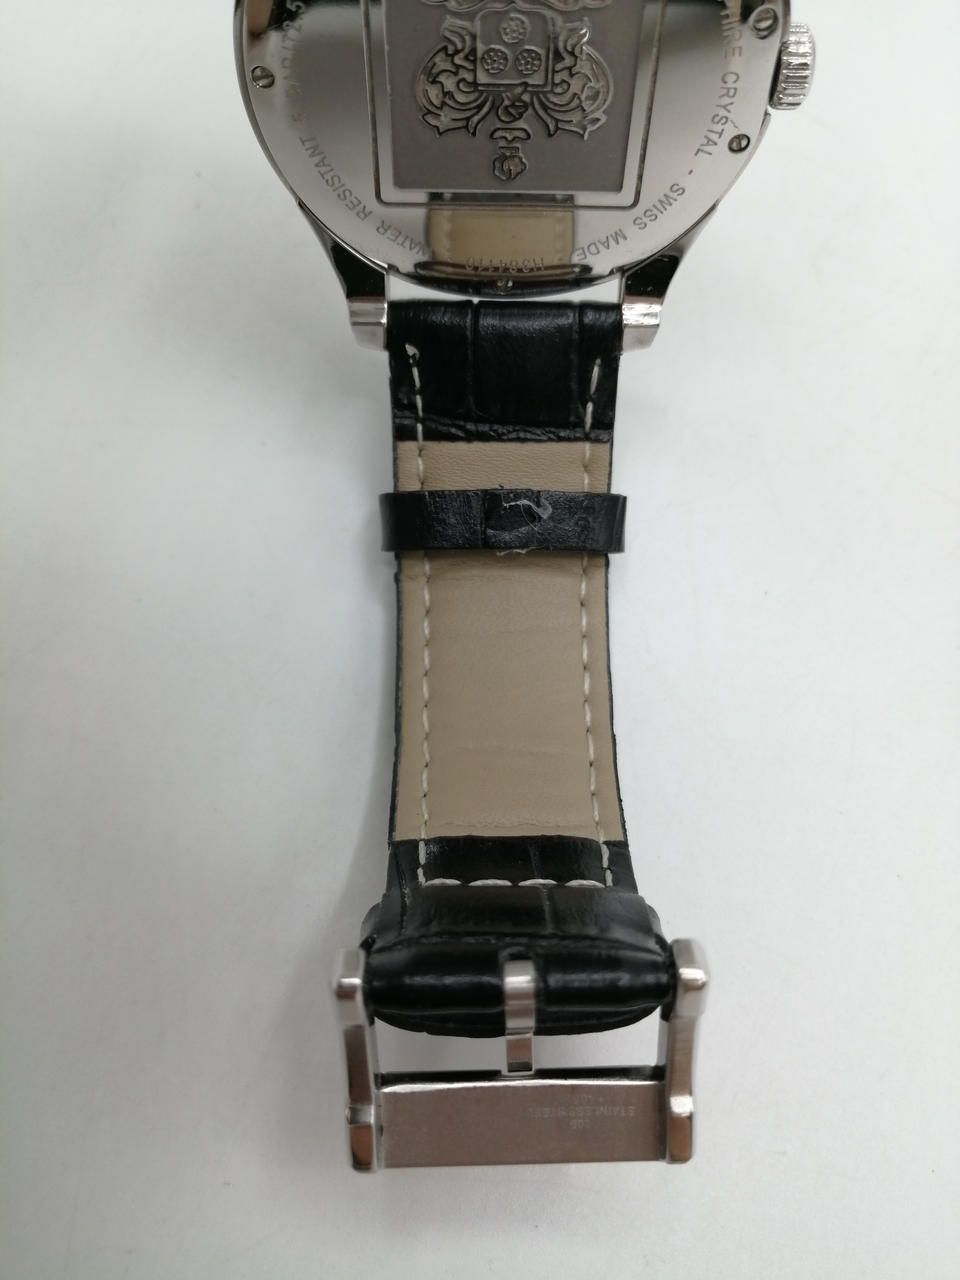 Hamilton Watch Model number: H384110 Jazzmaster QuartzJazzmaster Used in Japan